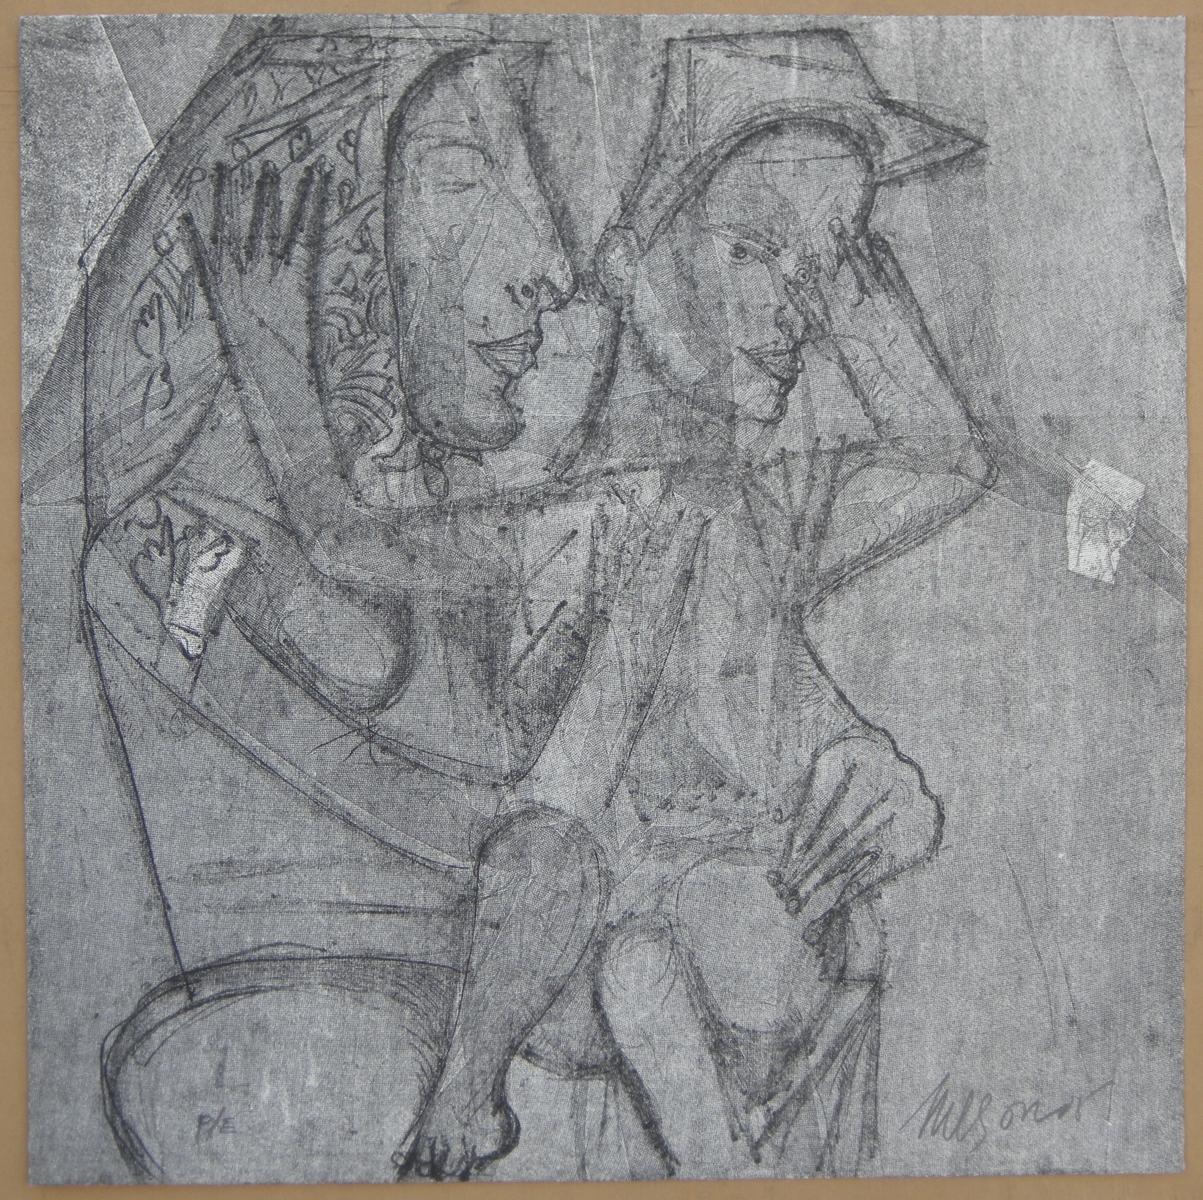 "Nelson Dominguez (Cuba, 1947)
'Madre (gris/victor guadalajara detras)', 2005
mixed media on paper Velin Arches 300 g.
19.7 x 19.7 in. (50 x 50 cm.)
Prueba de Estado (P.E)
ID: DOM-211"